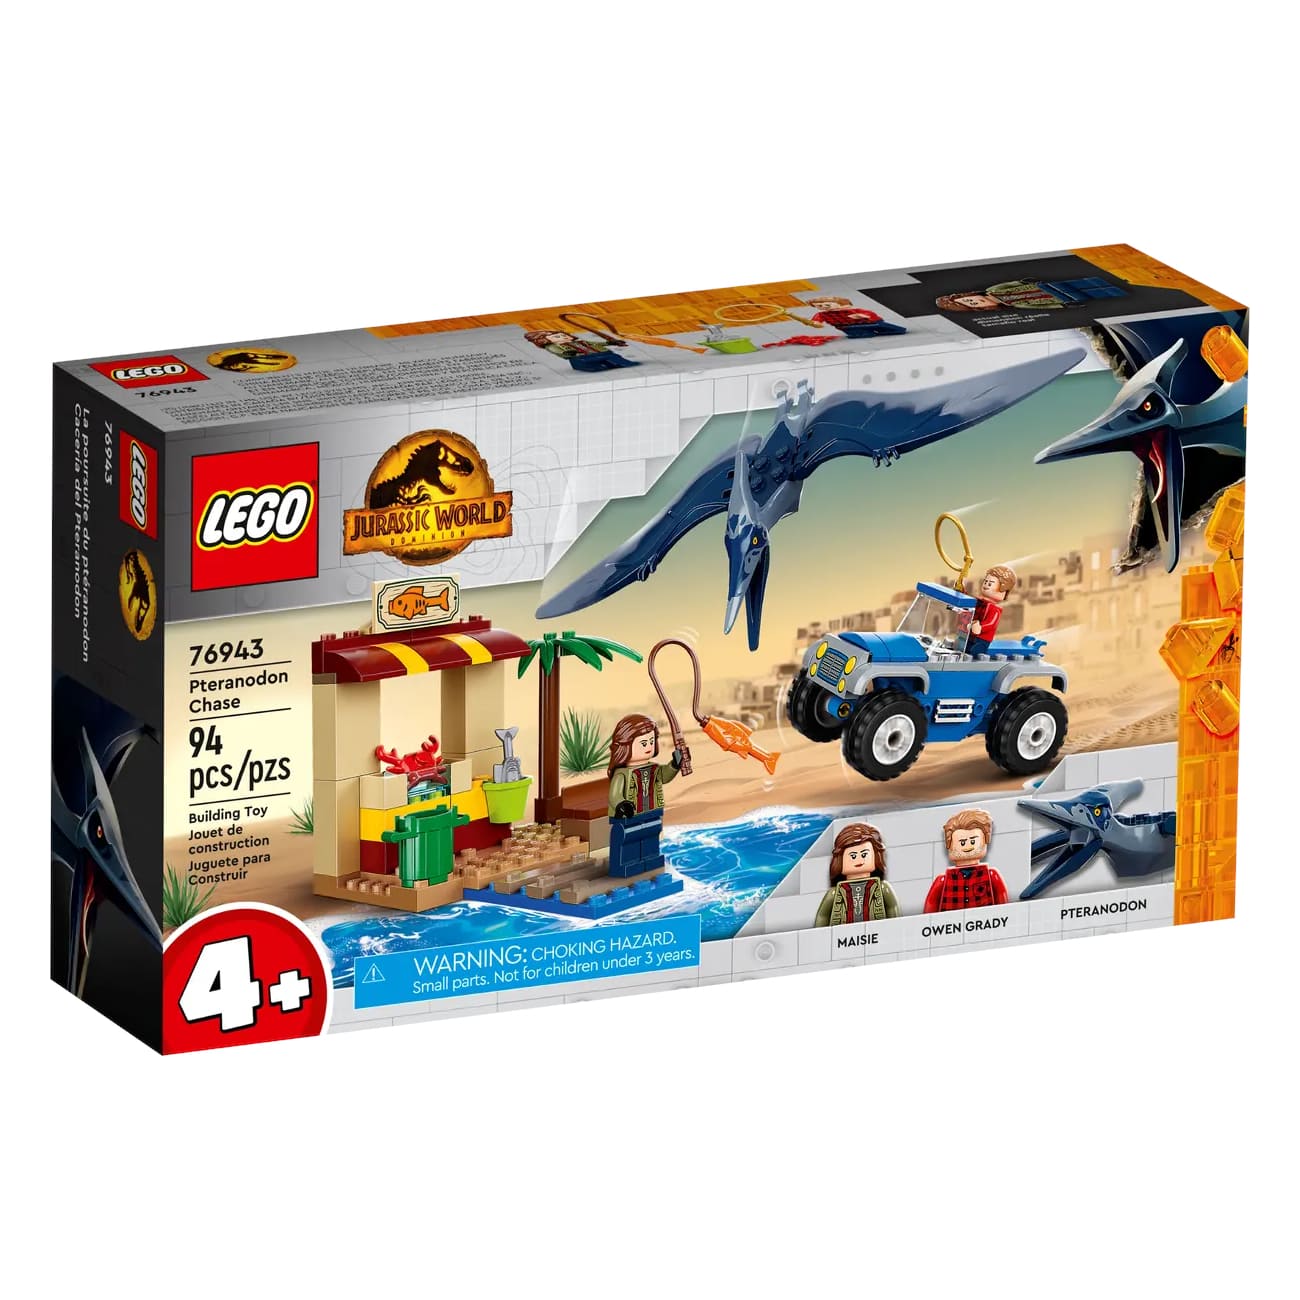 Конструктор LEGO Jurassic World Pteranodon Chase 76943, 94 детали цена и фото